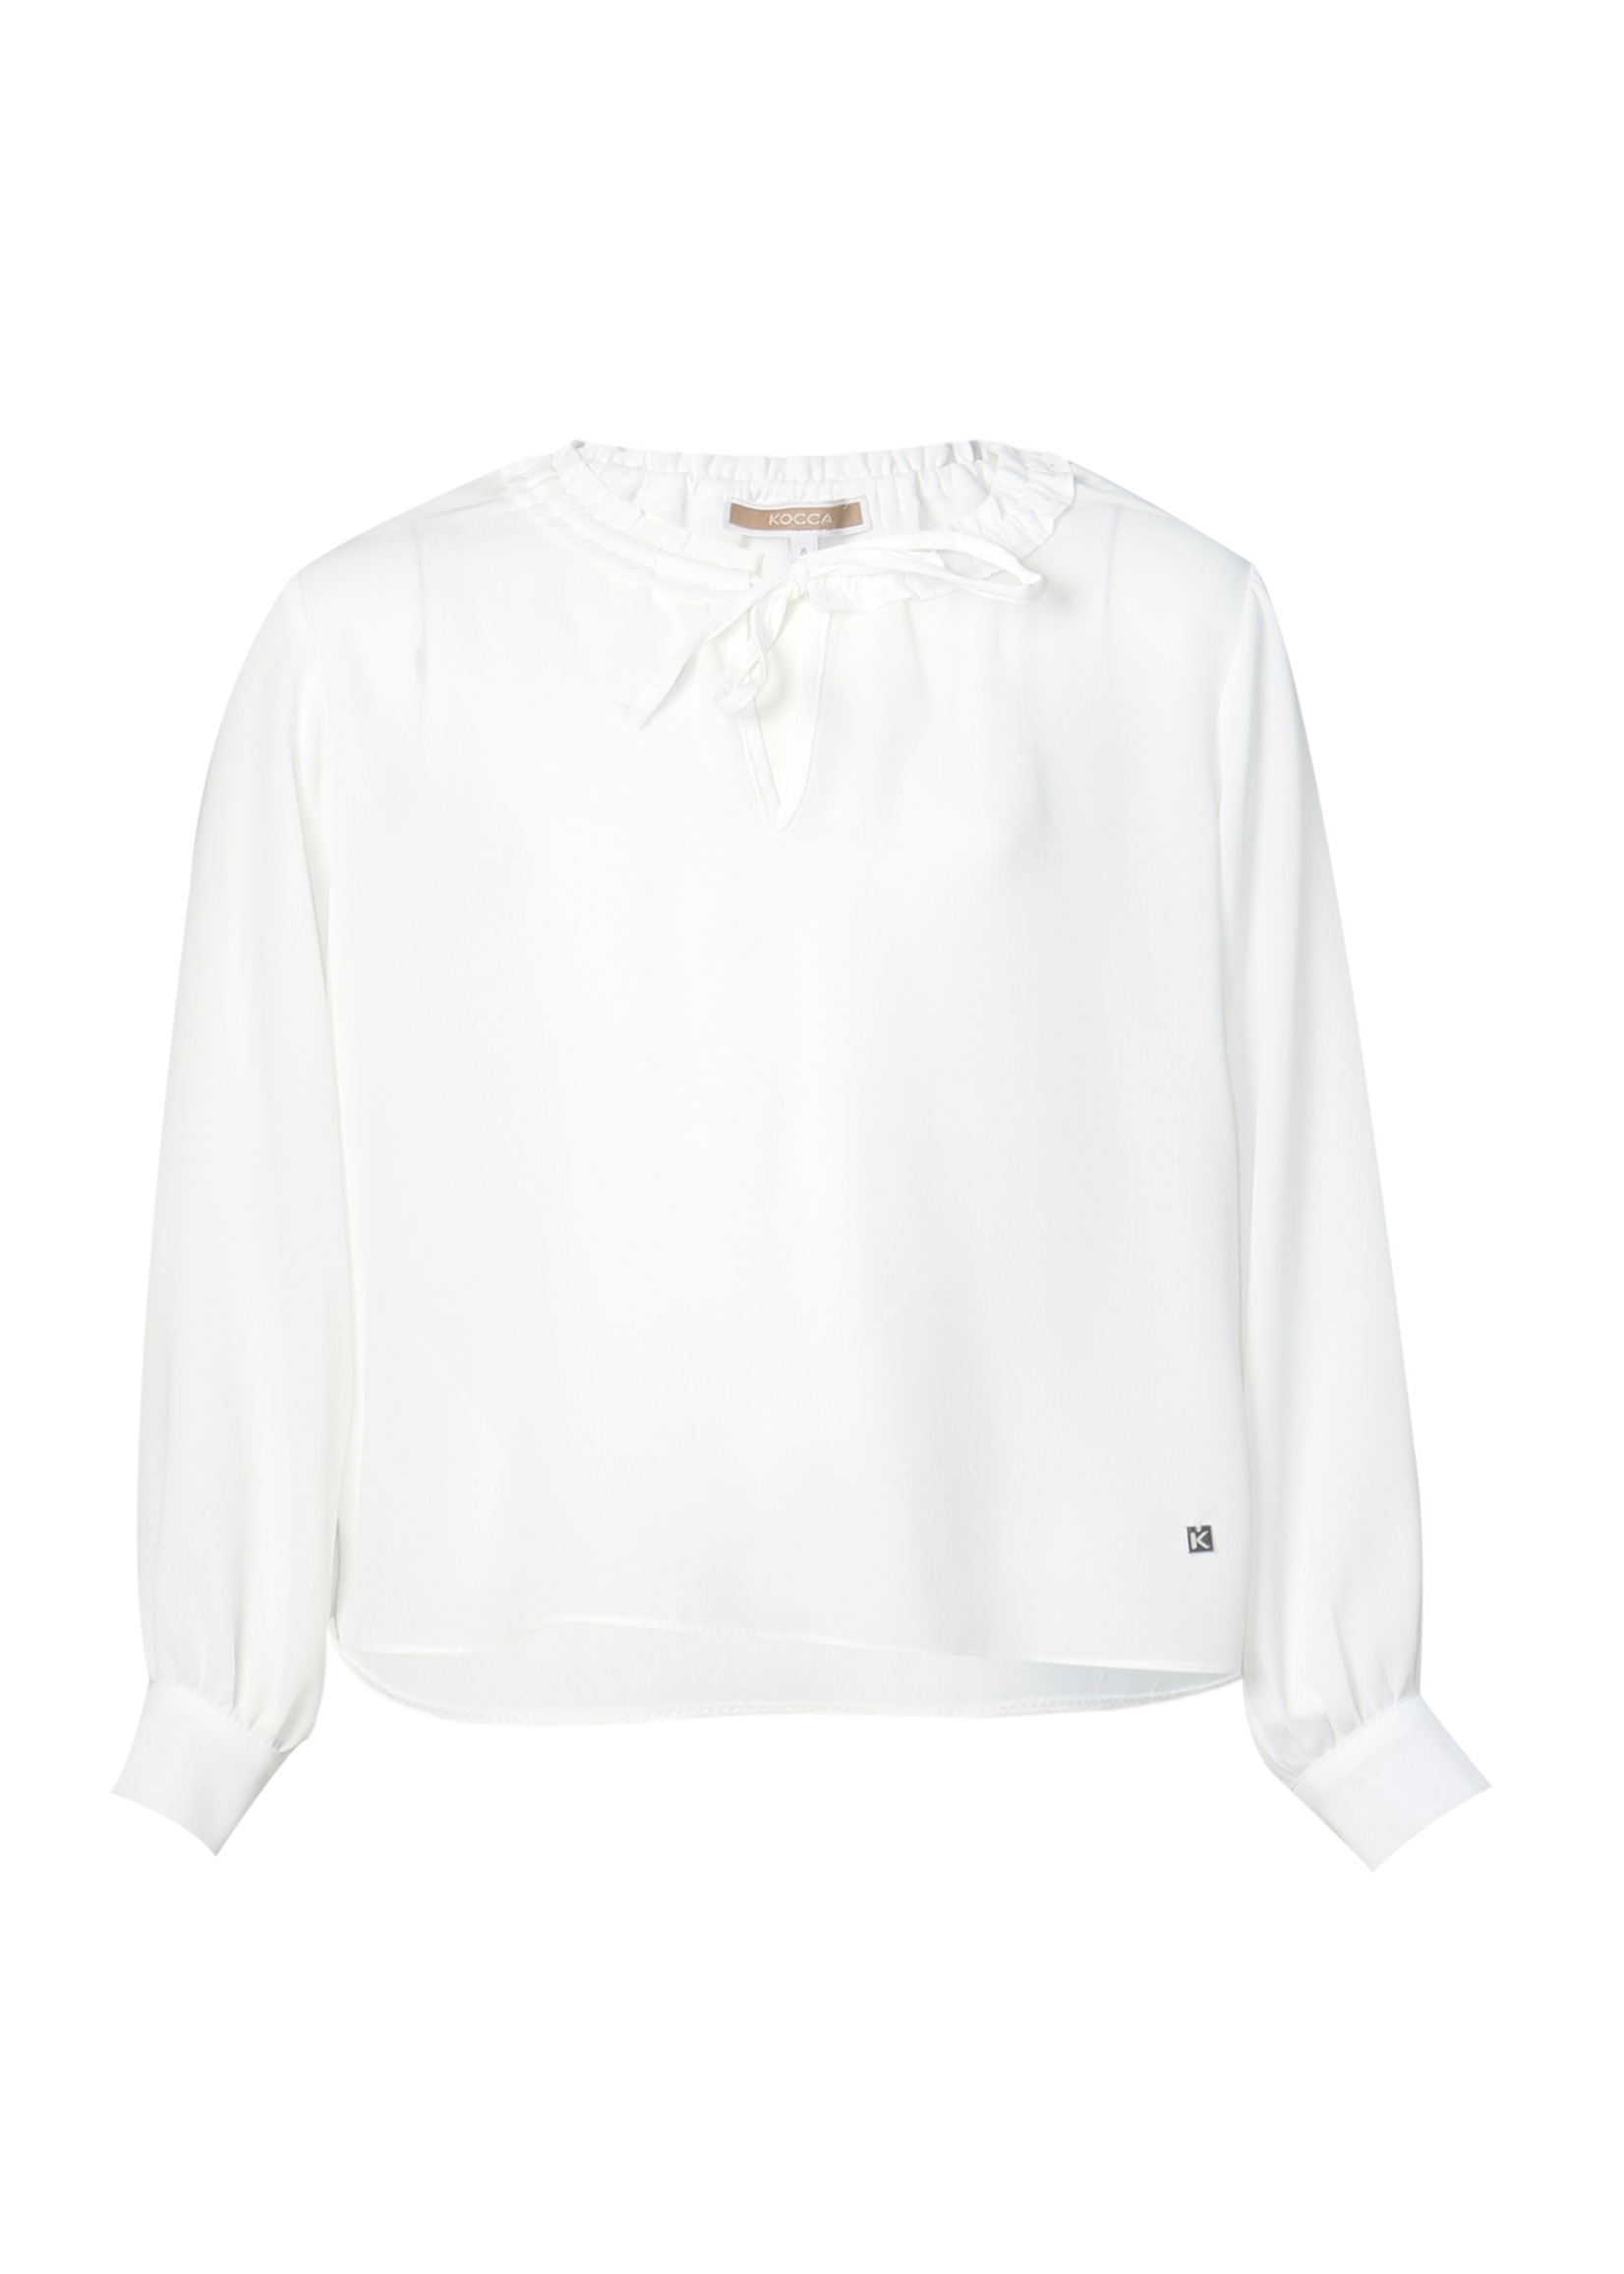 KOCCA KOCCA loose blouse white - ELURA